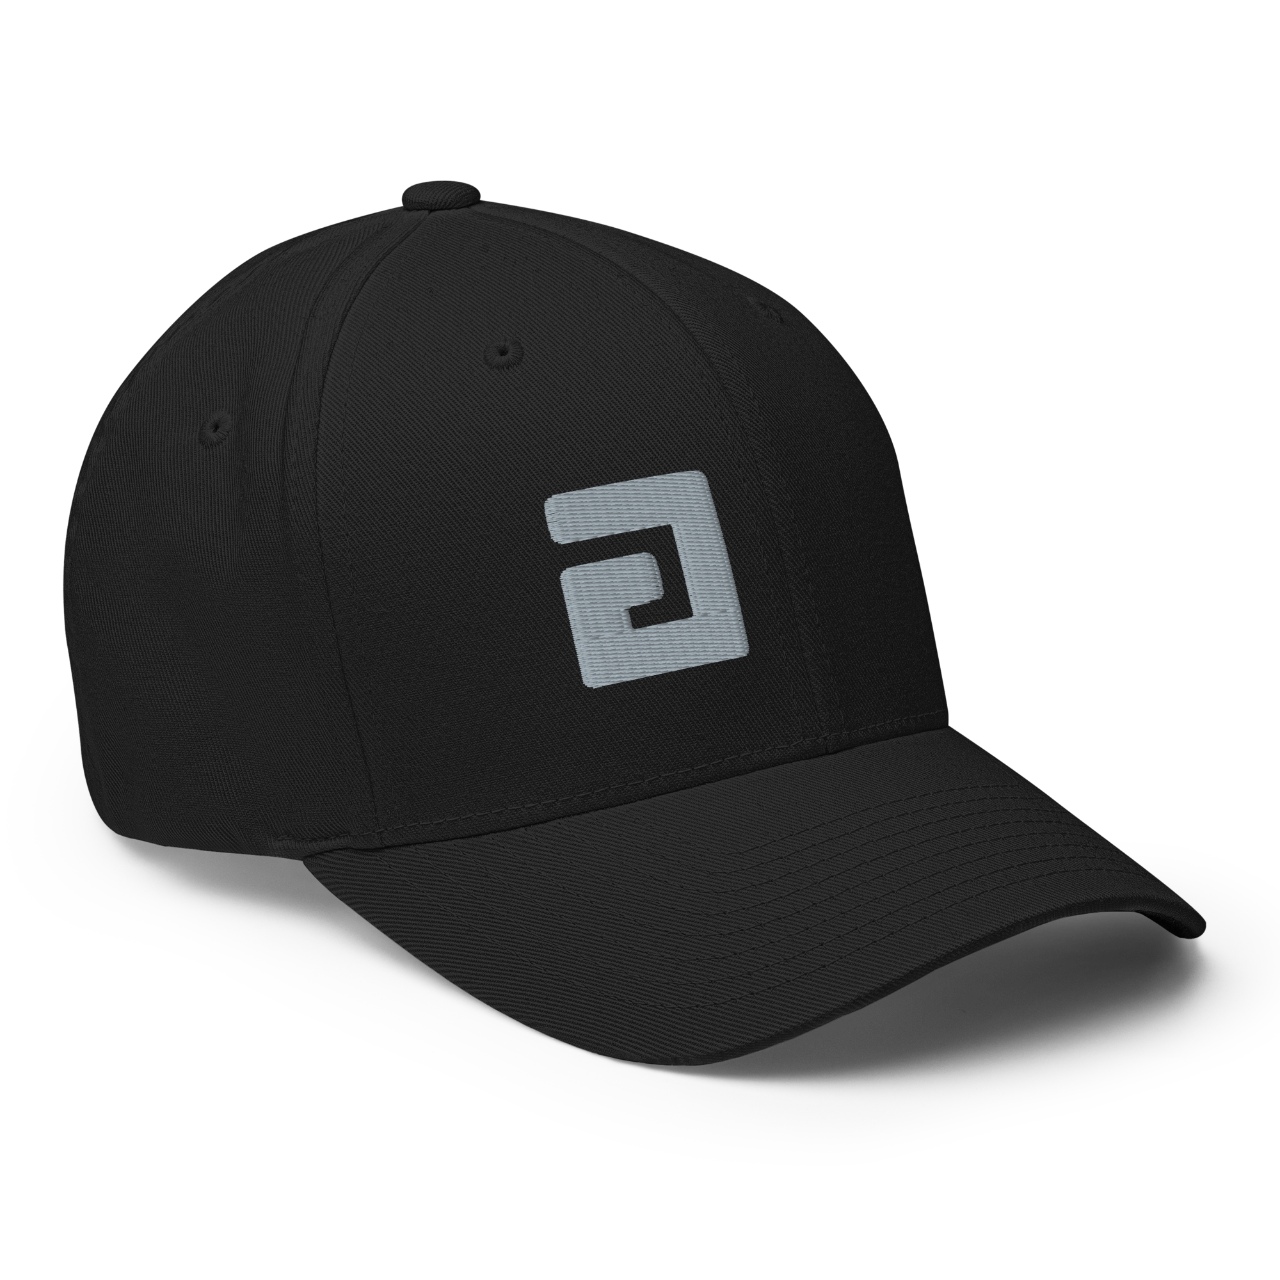 axsgtr axess electronics guitar music industry branded merchandise swag flexfit closed back baseball cap hat black grey